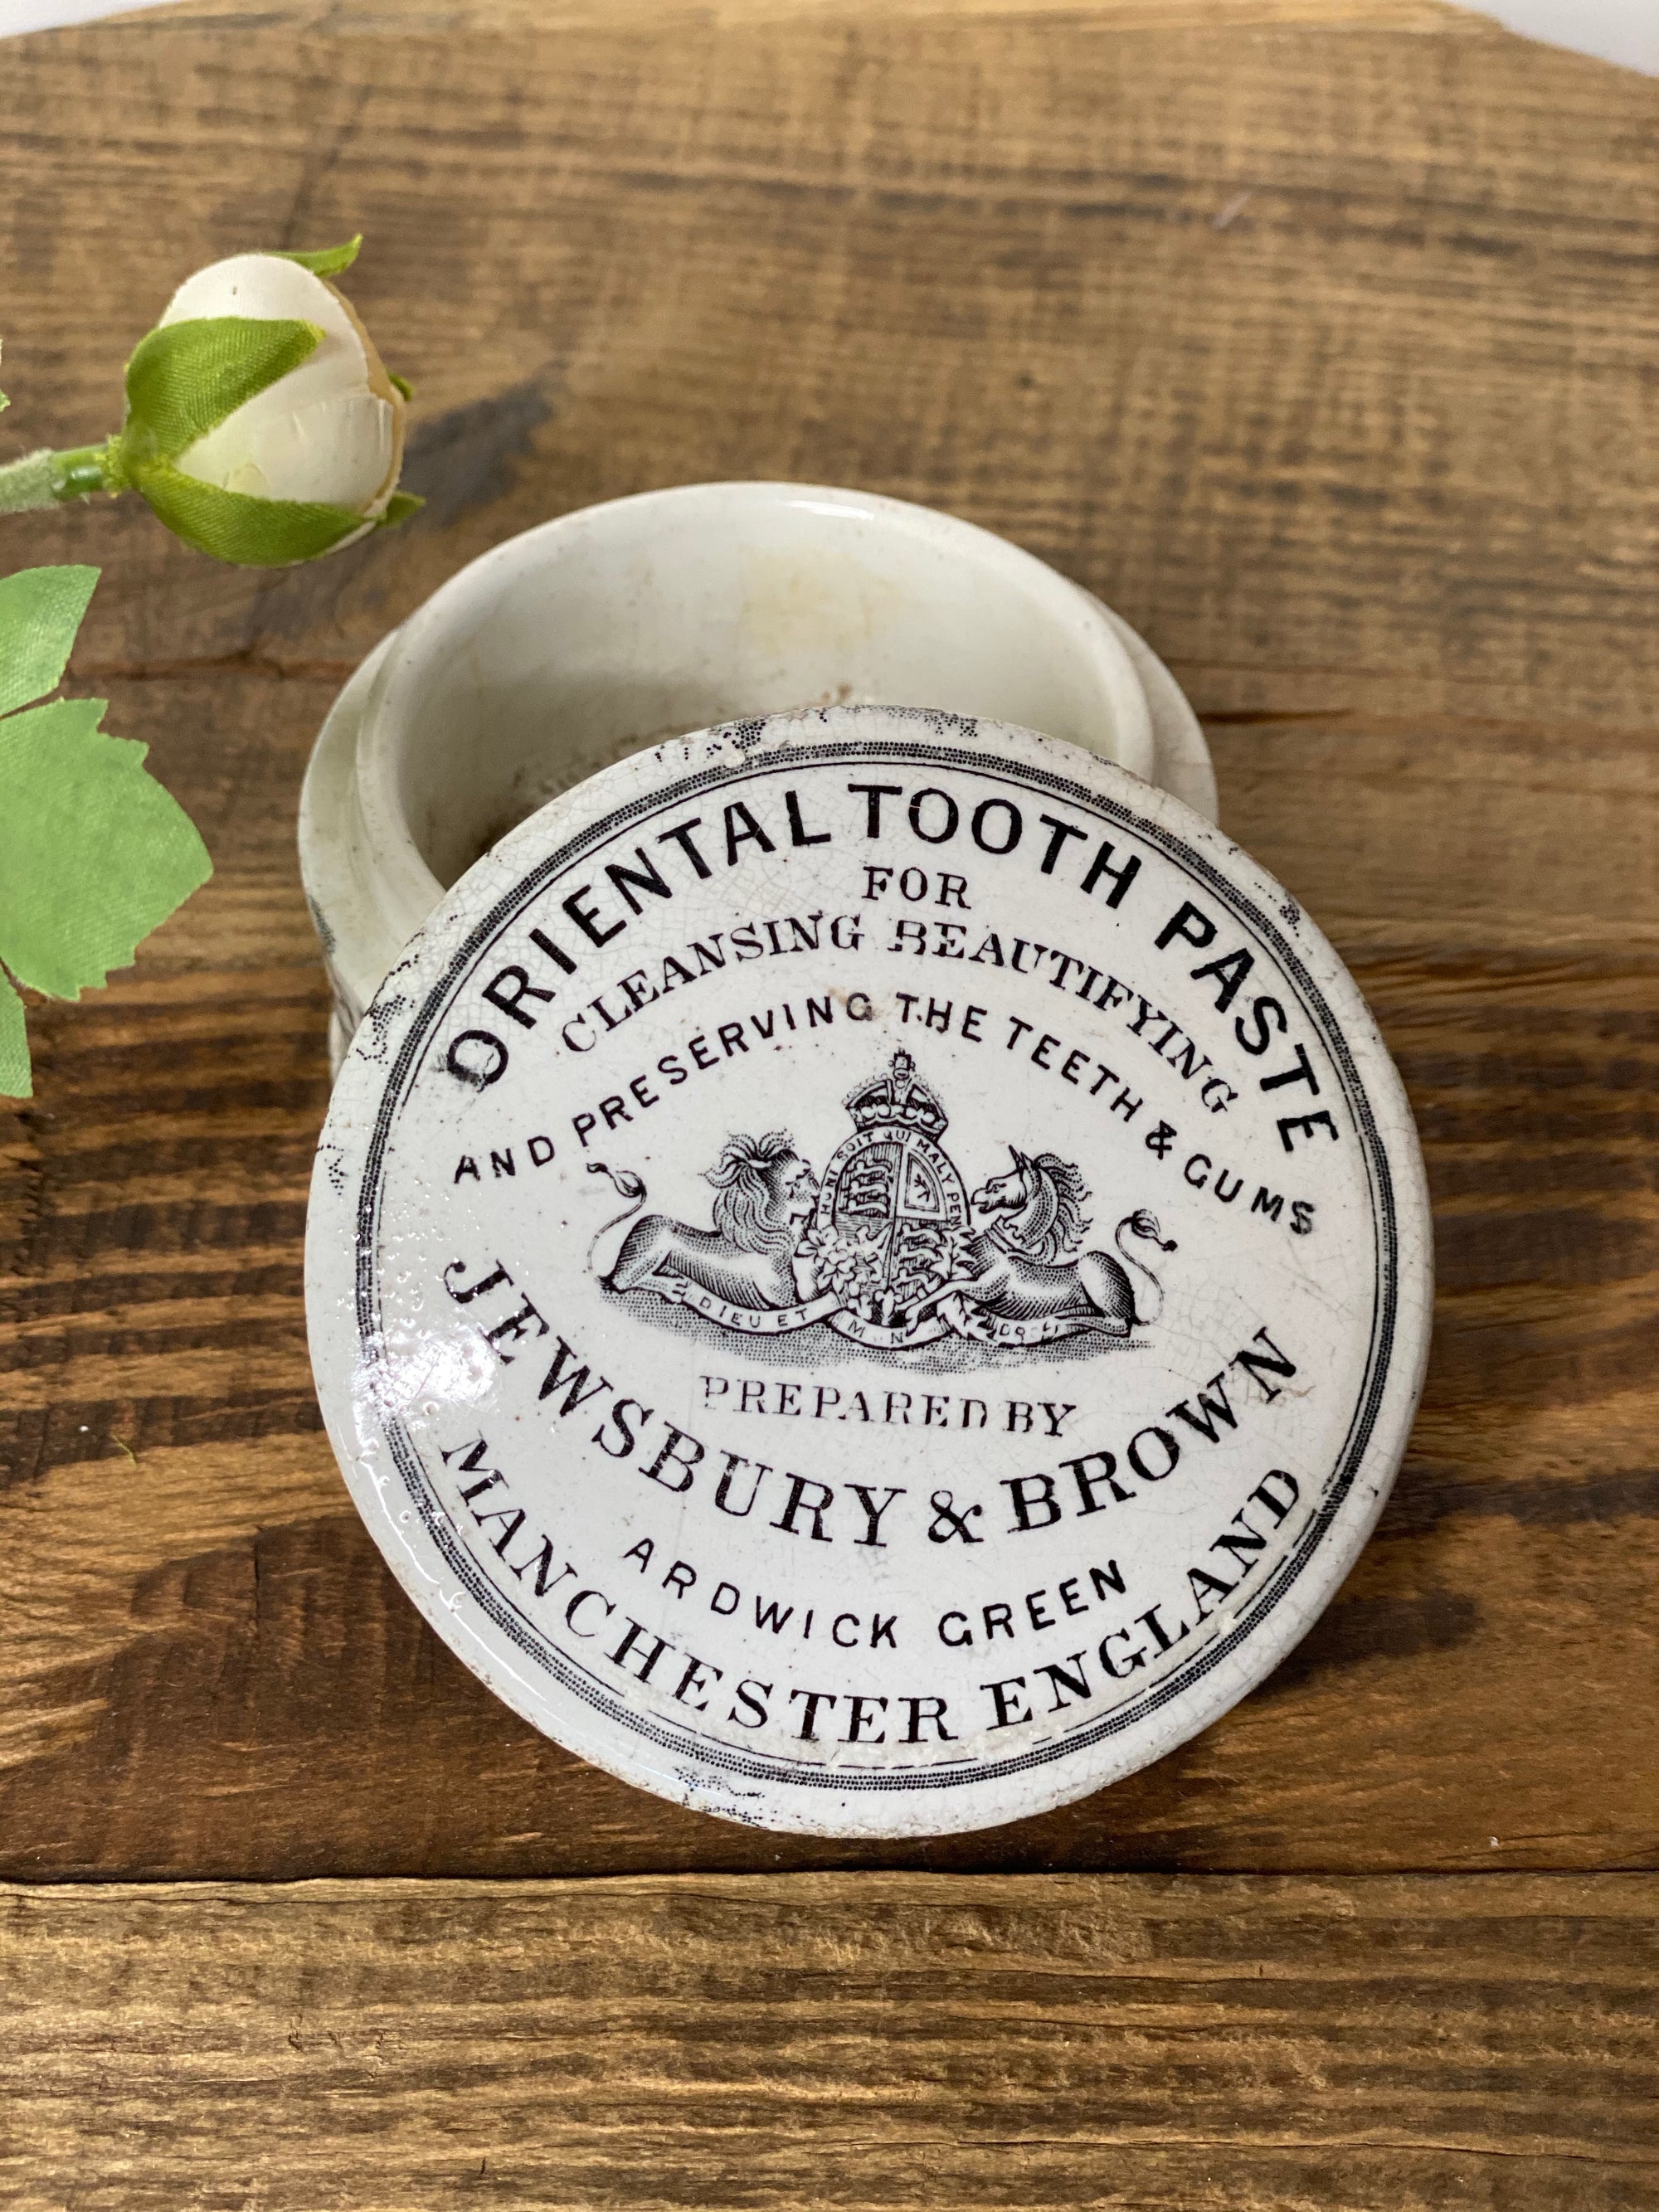 Jewsbury & Brown Oriental Tooth Paste "English Advertising Pottery"